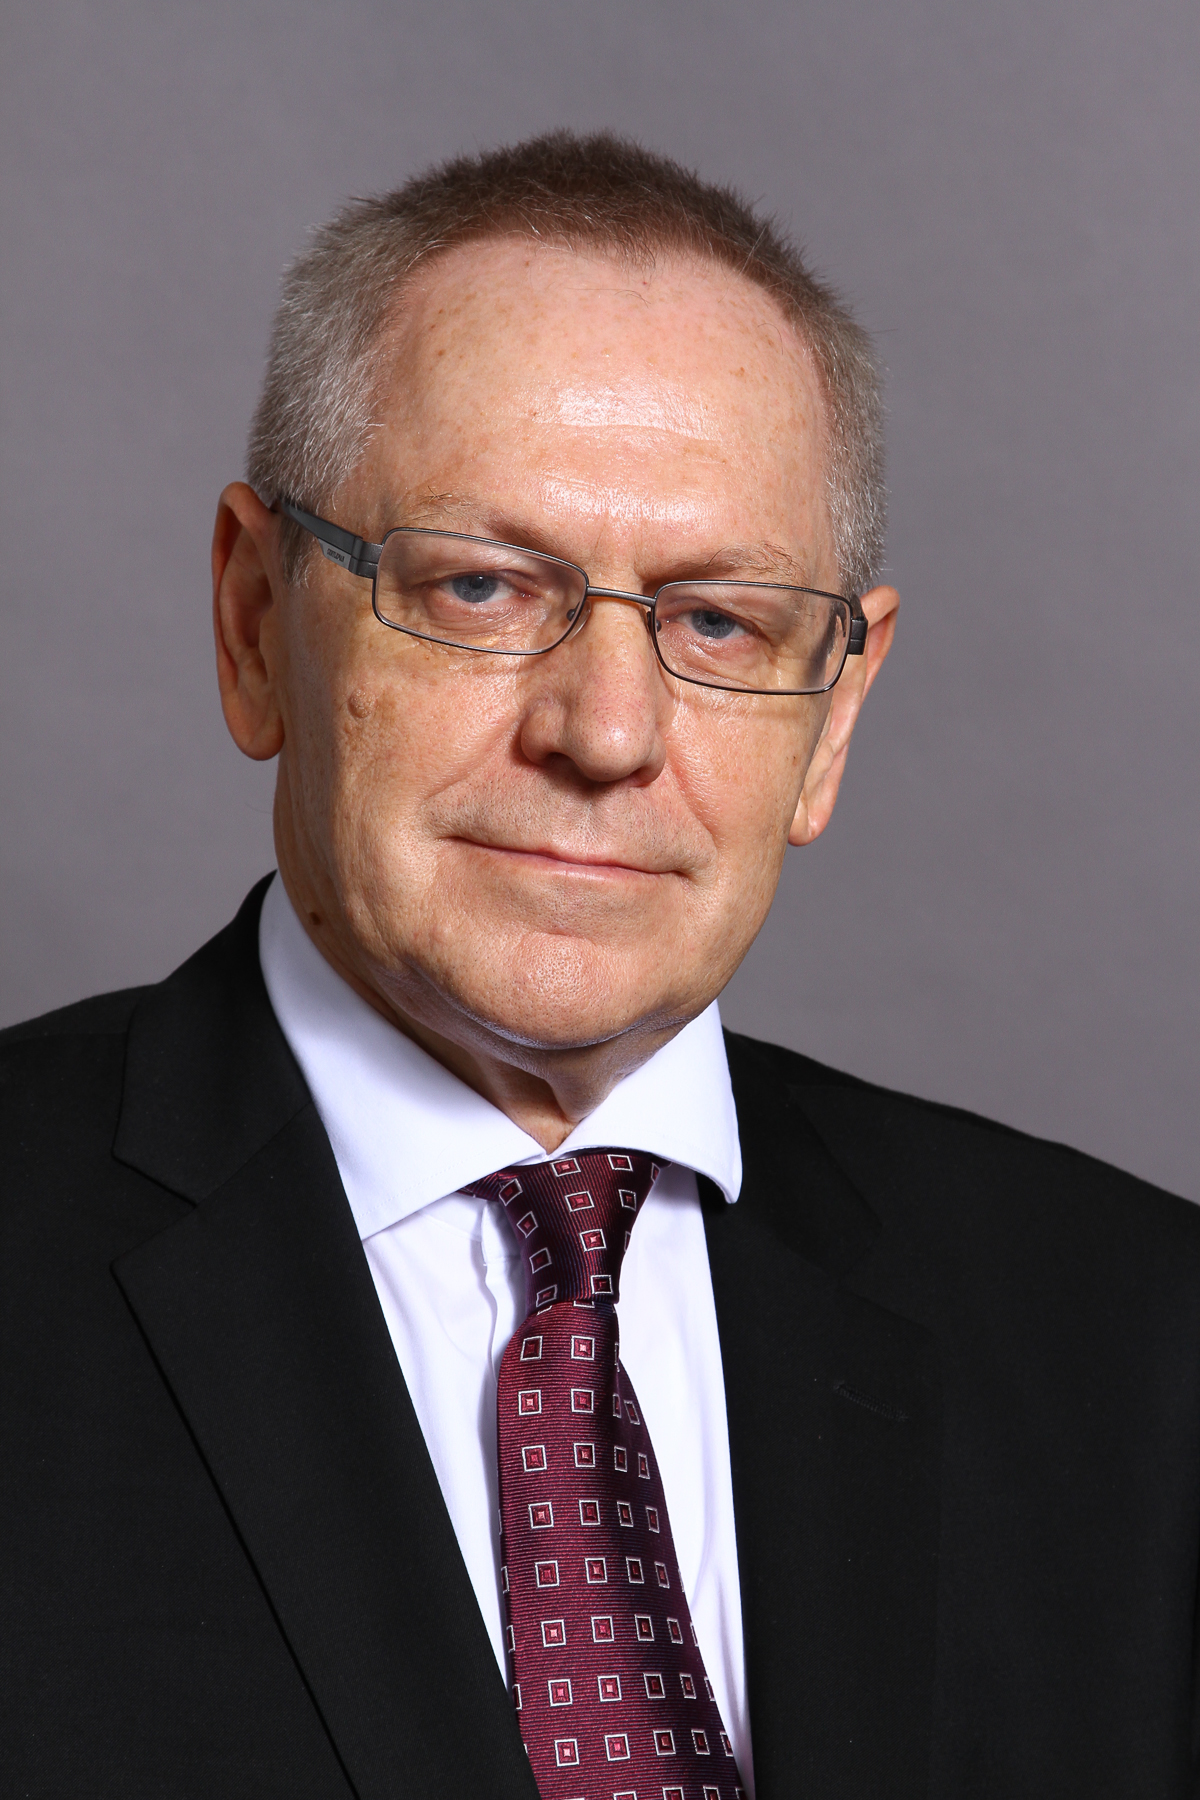 MUDr. Ladislav Pásztor, MSc, čestný prezident ASL SR